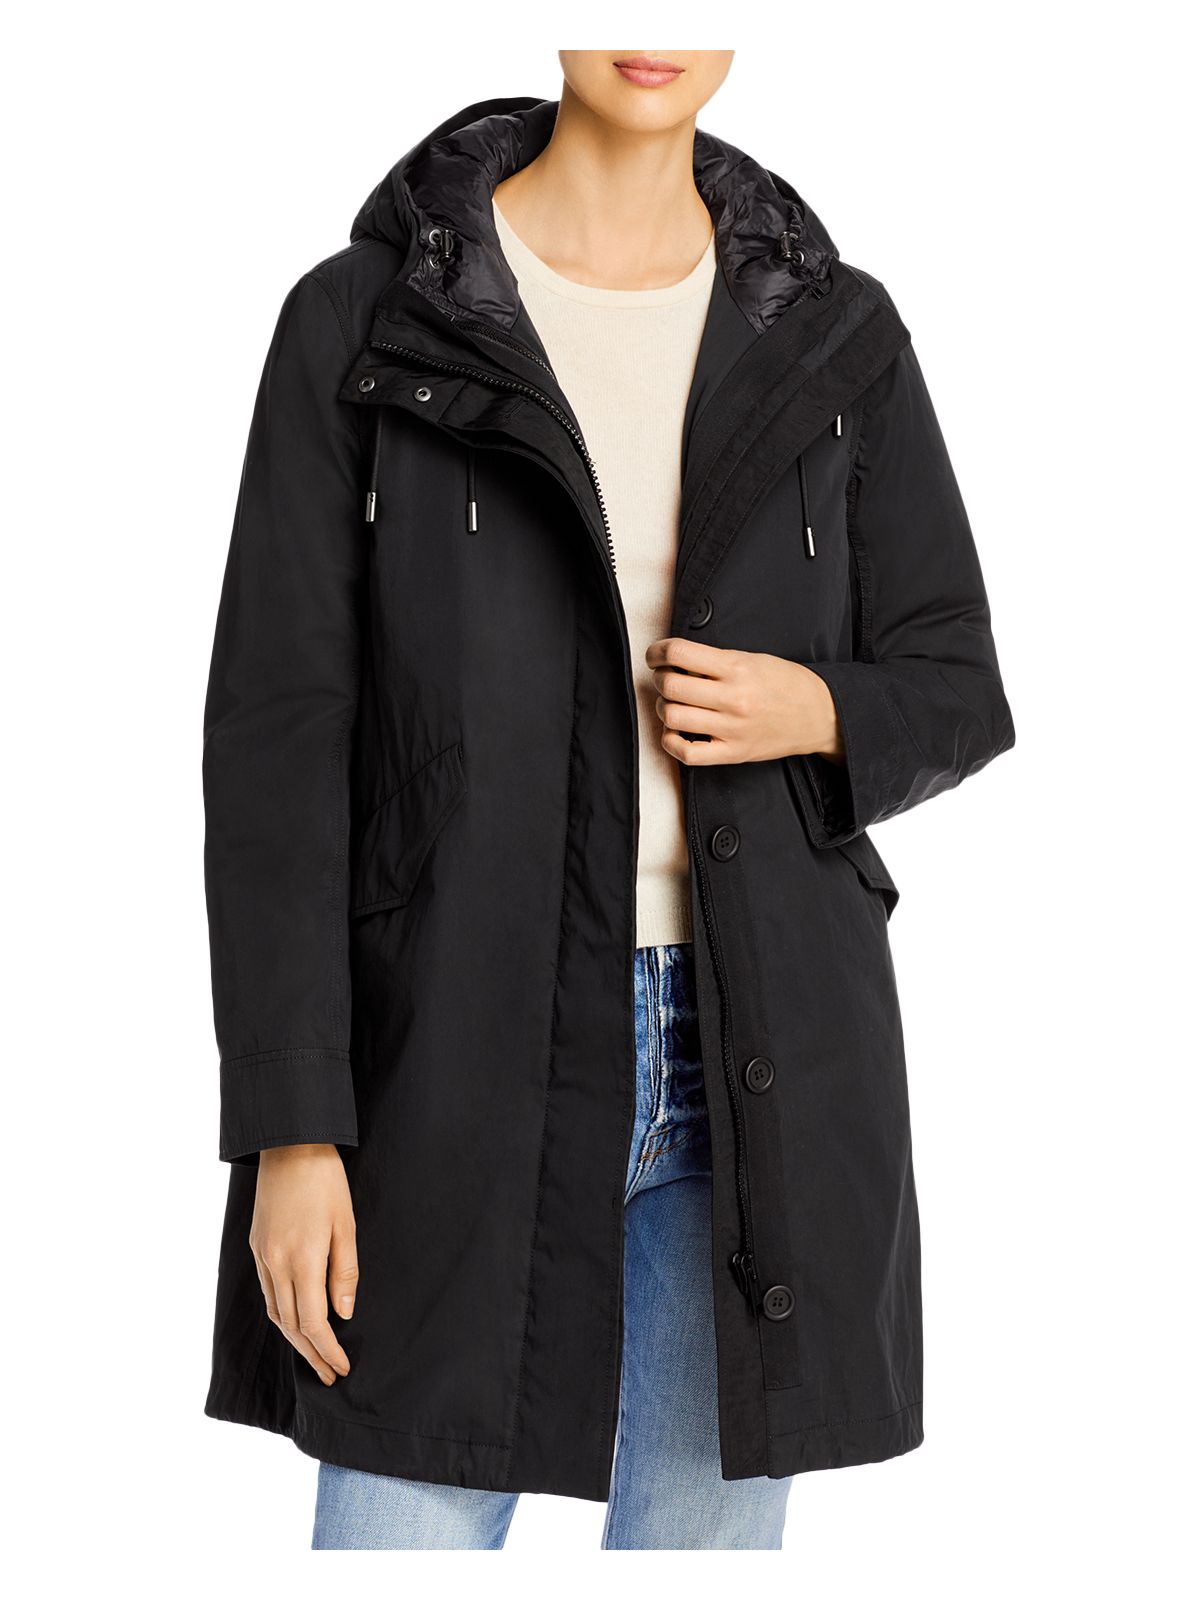 YS ARMY Womens Zip Up Winter Jacket Coat